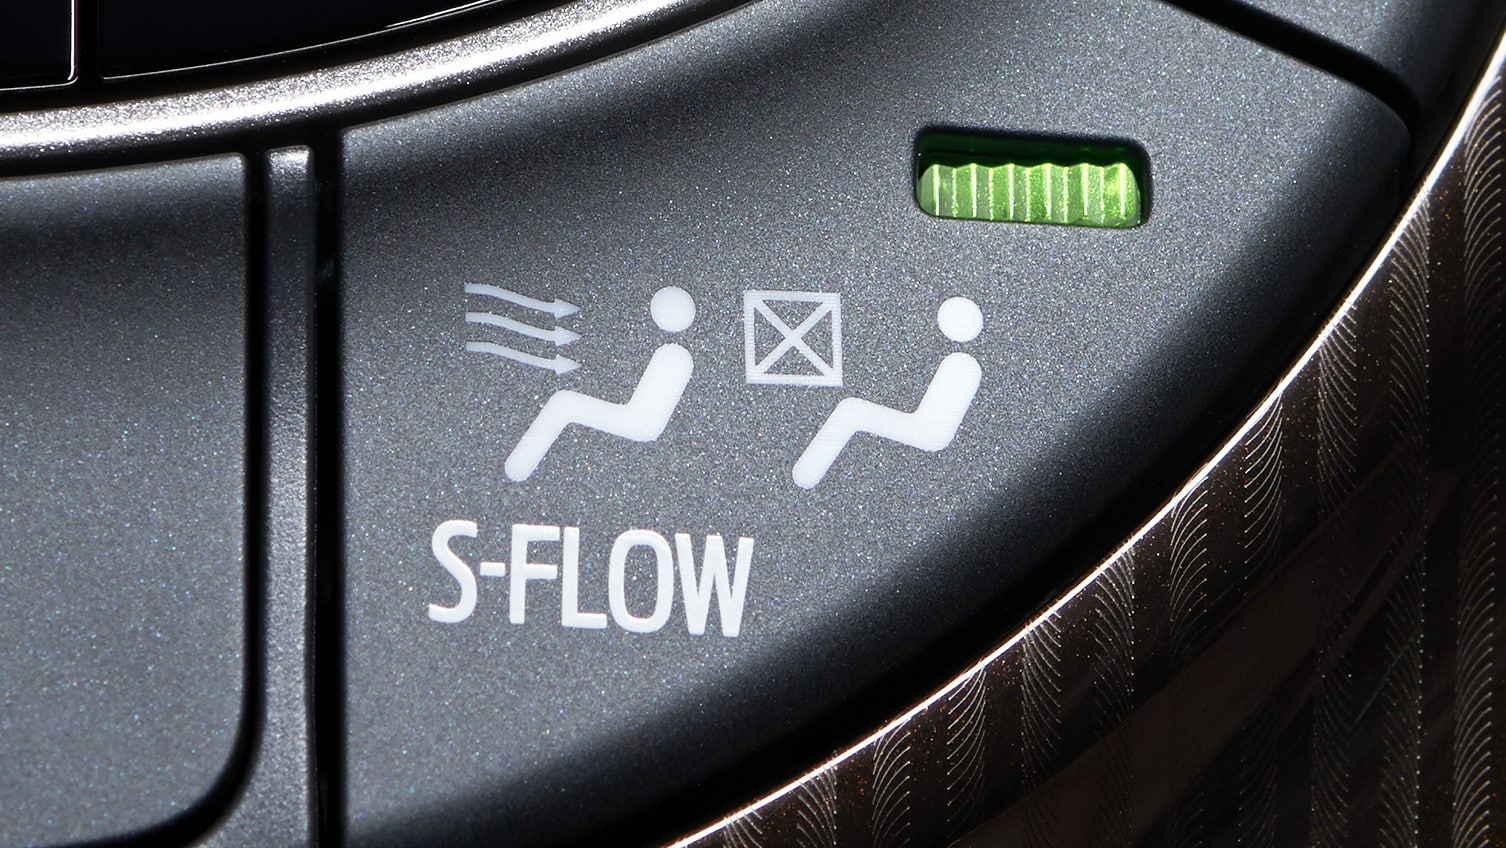 S-FLOW（1席集中モード）